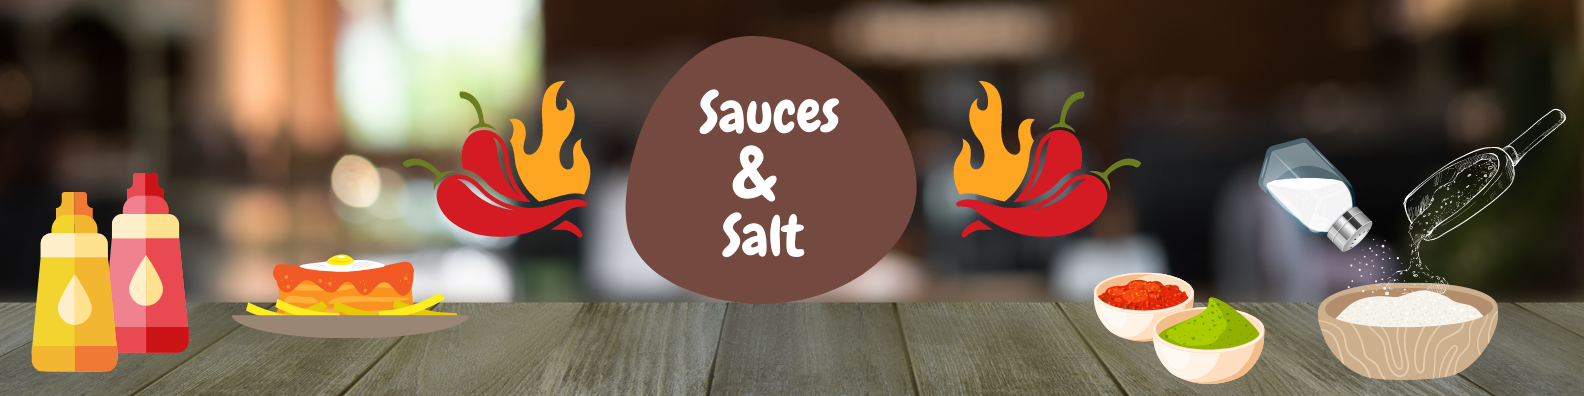 Sauces & Salt